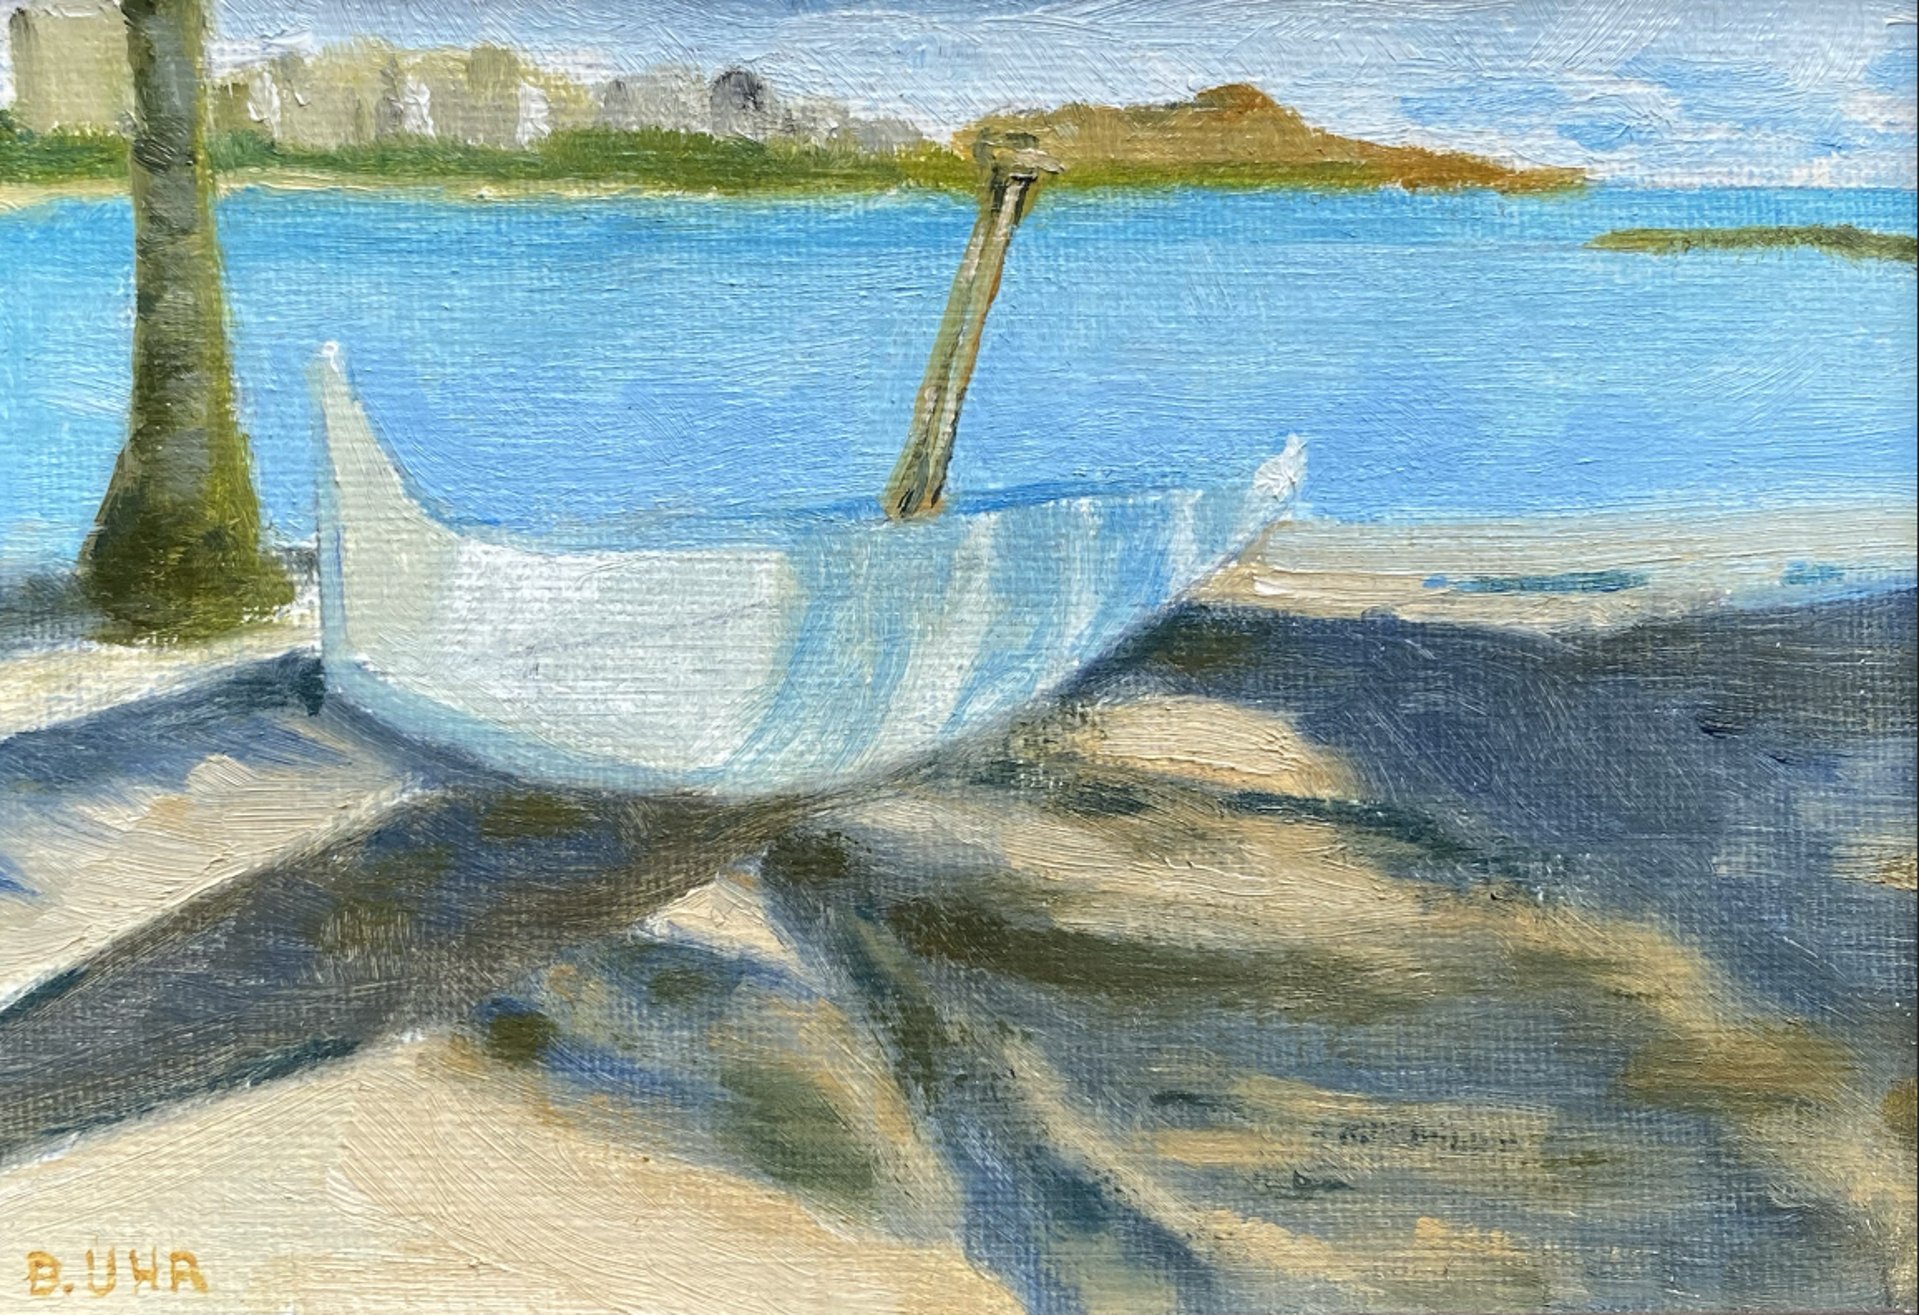 White Canoe by Burton Uhr